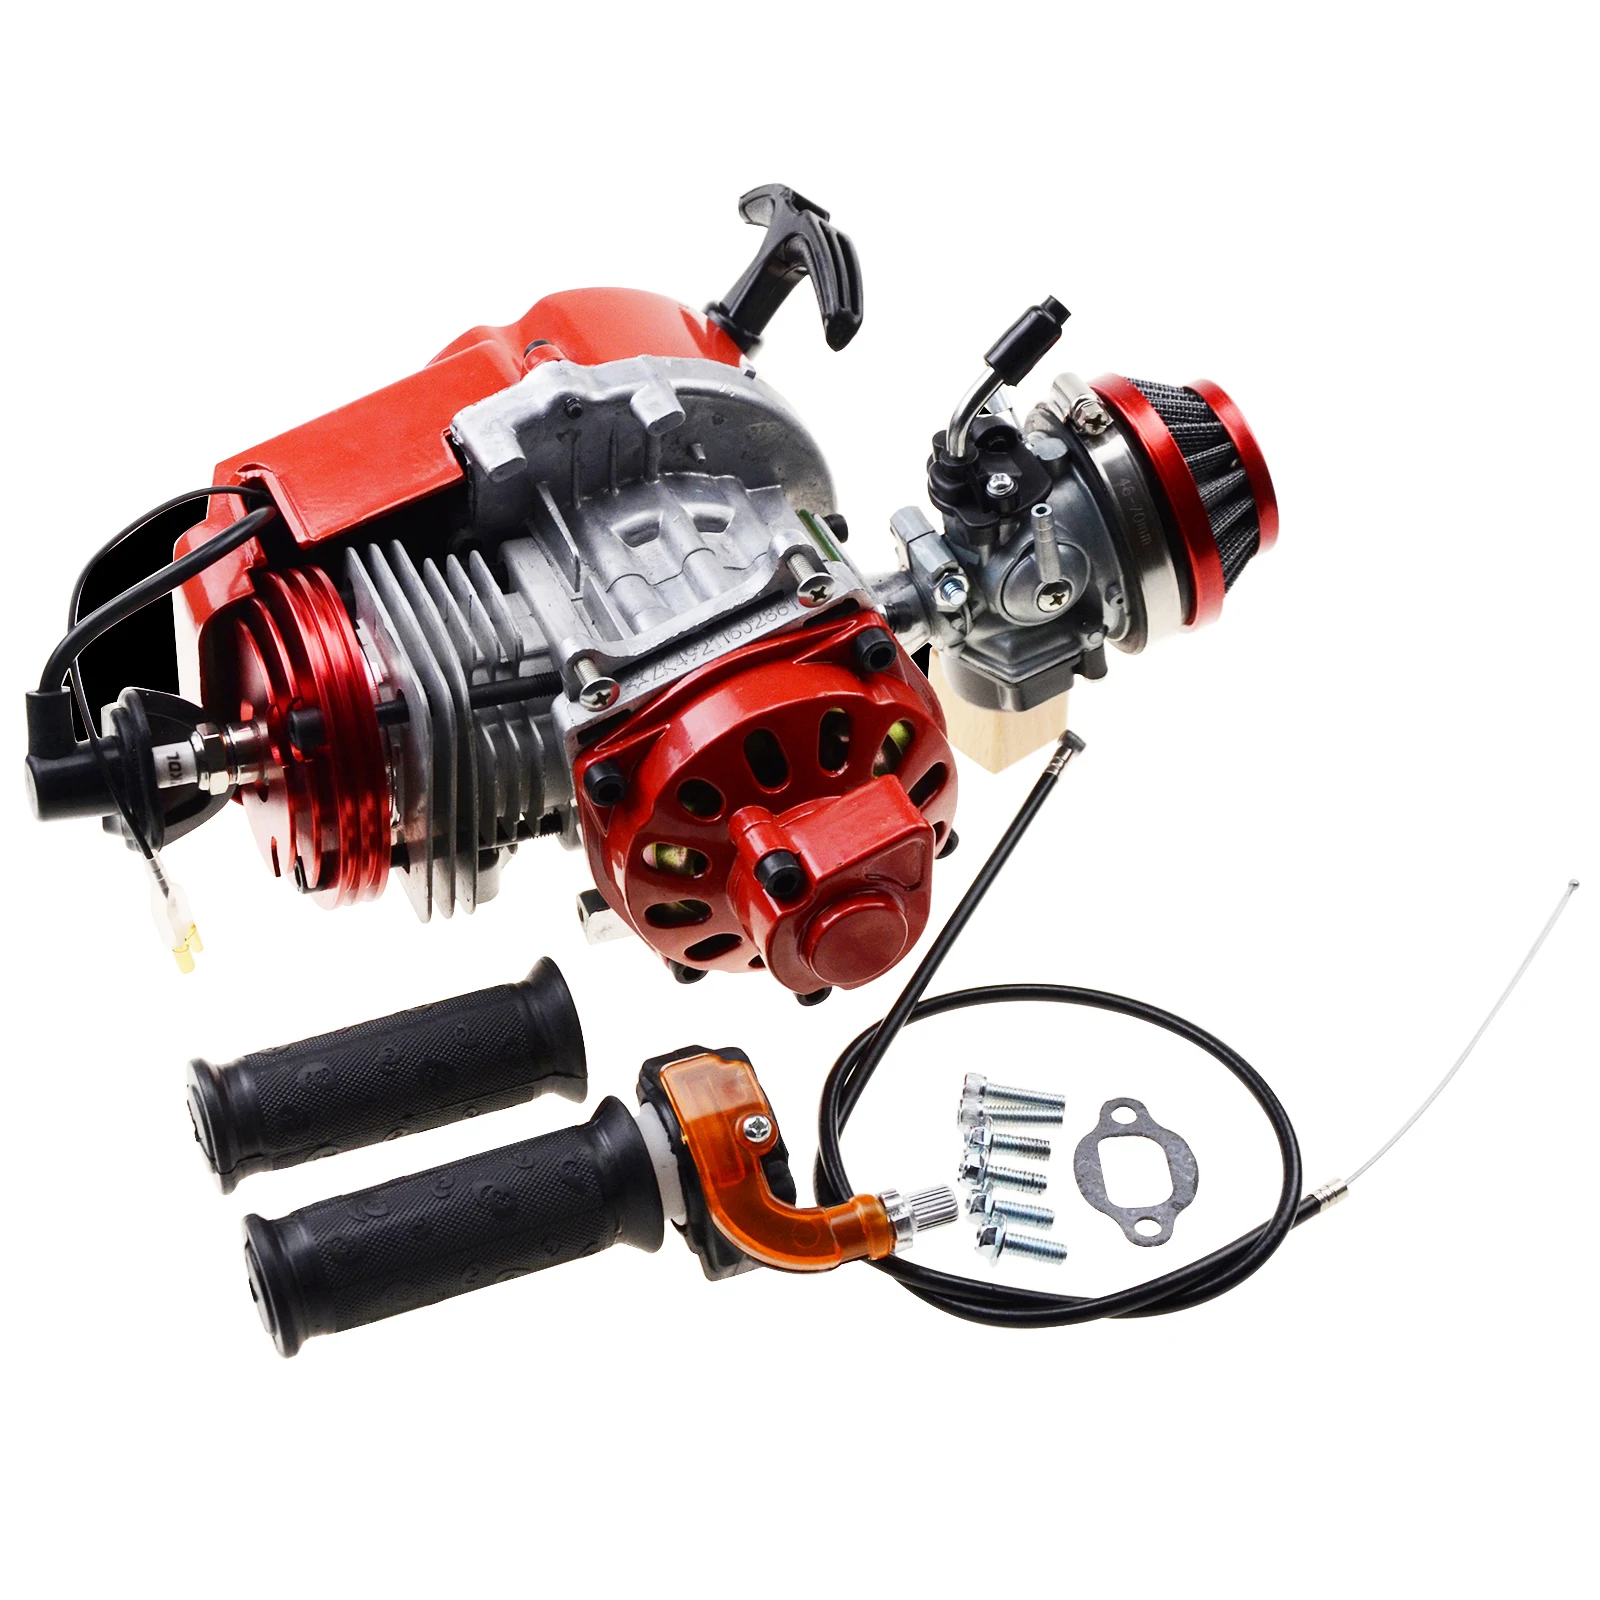 
GOOFIT Red 44mm Big Bore 2 Stroke Pocket Bicycle Engine Cylinder CNC Cover Racing Carburetor for 47cc 49cc Mini Quad Pocket Bike  (1600165183503)